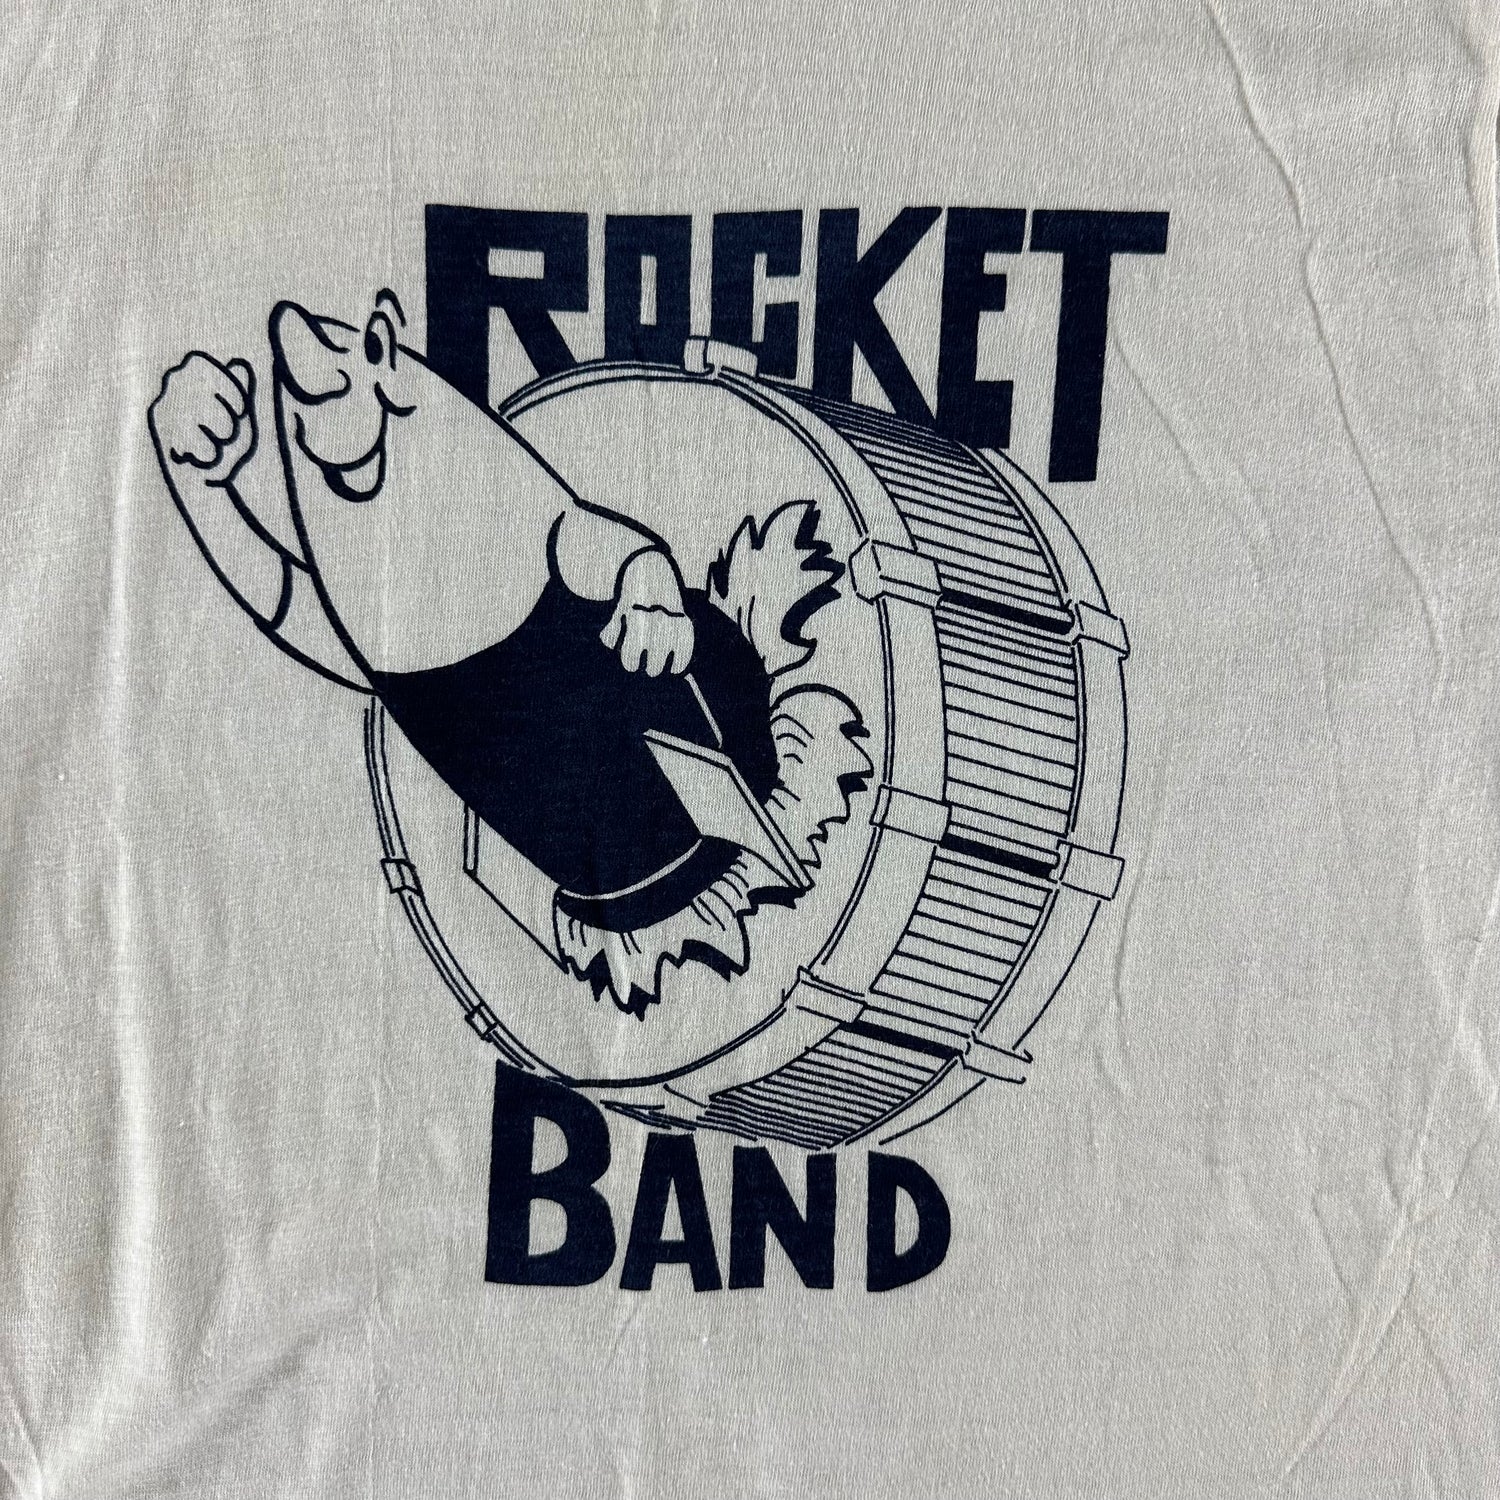 Vintage 1970s Rocket Band T-shirt size Large